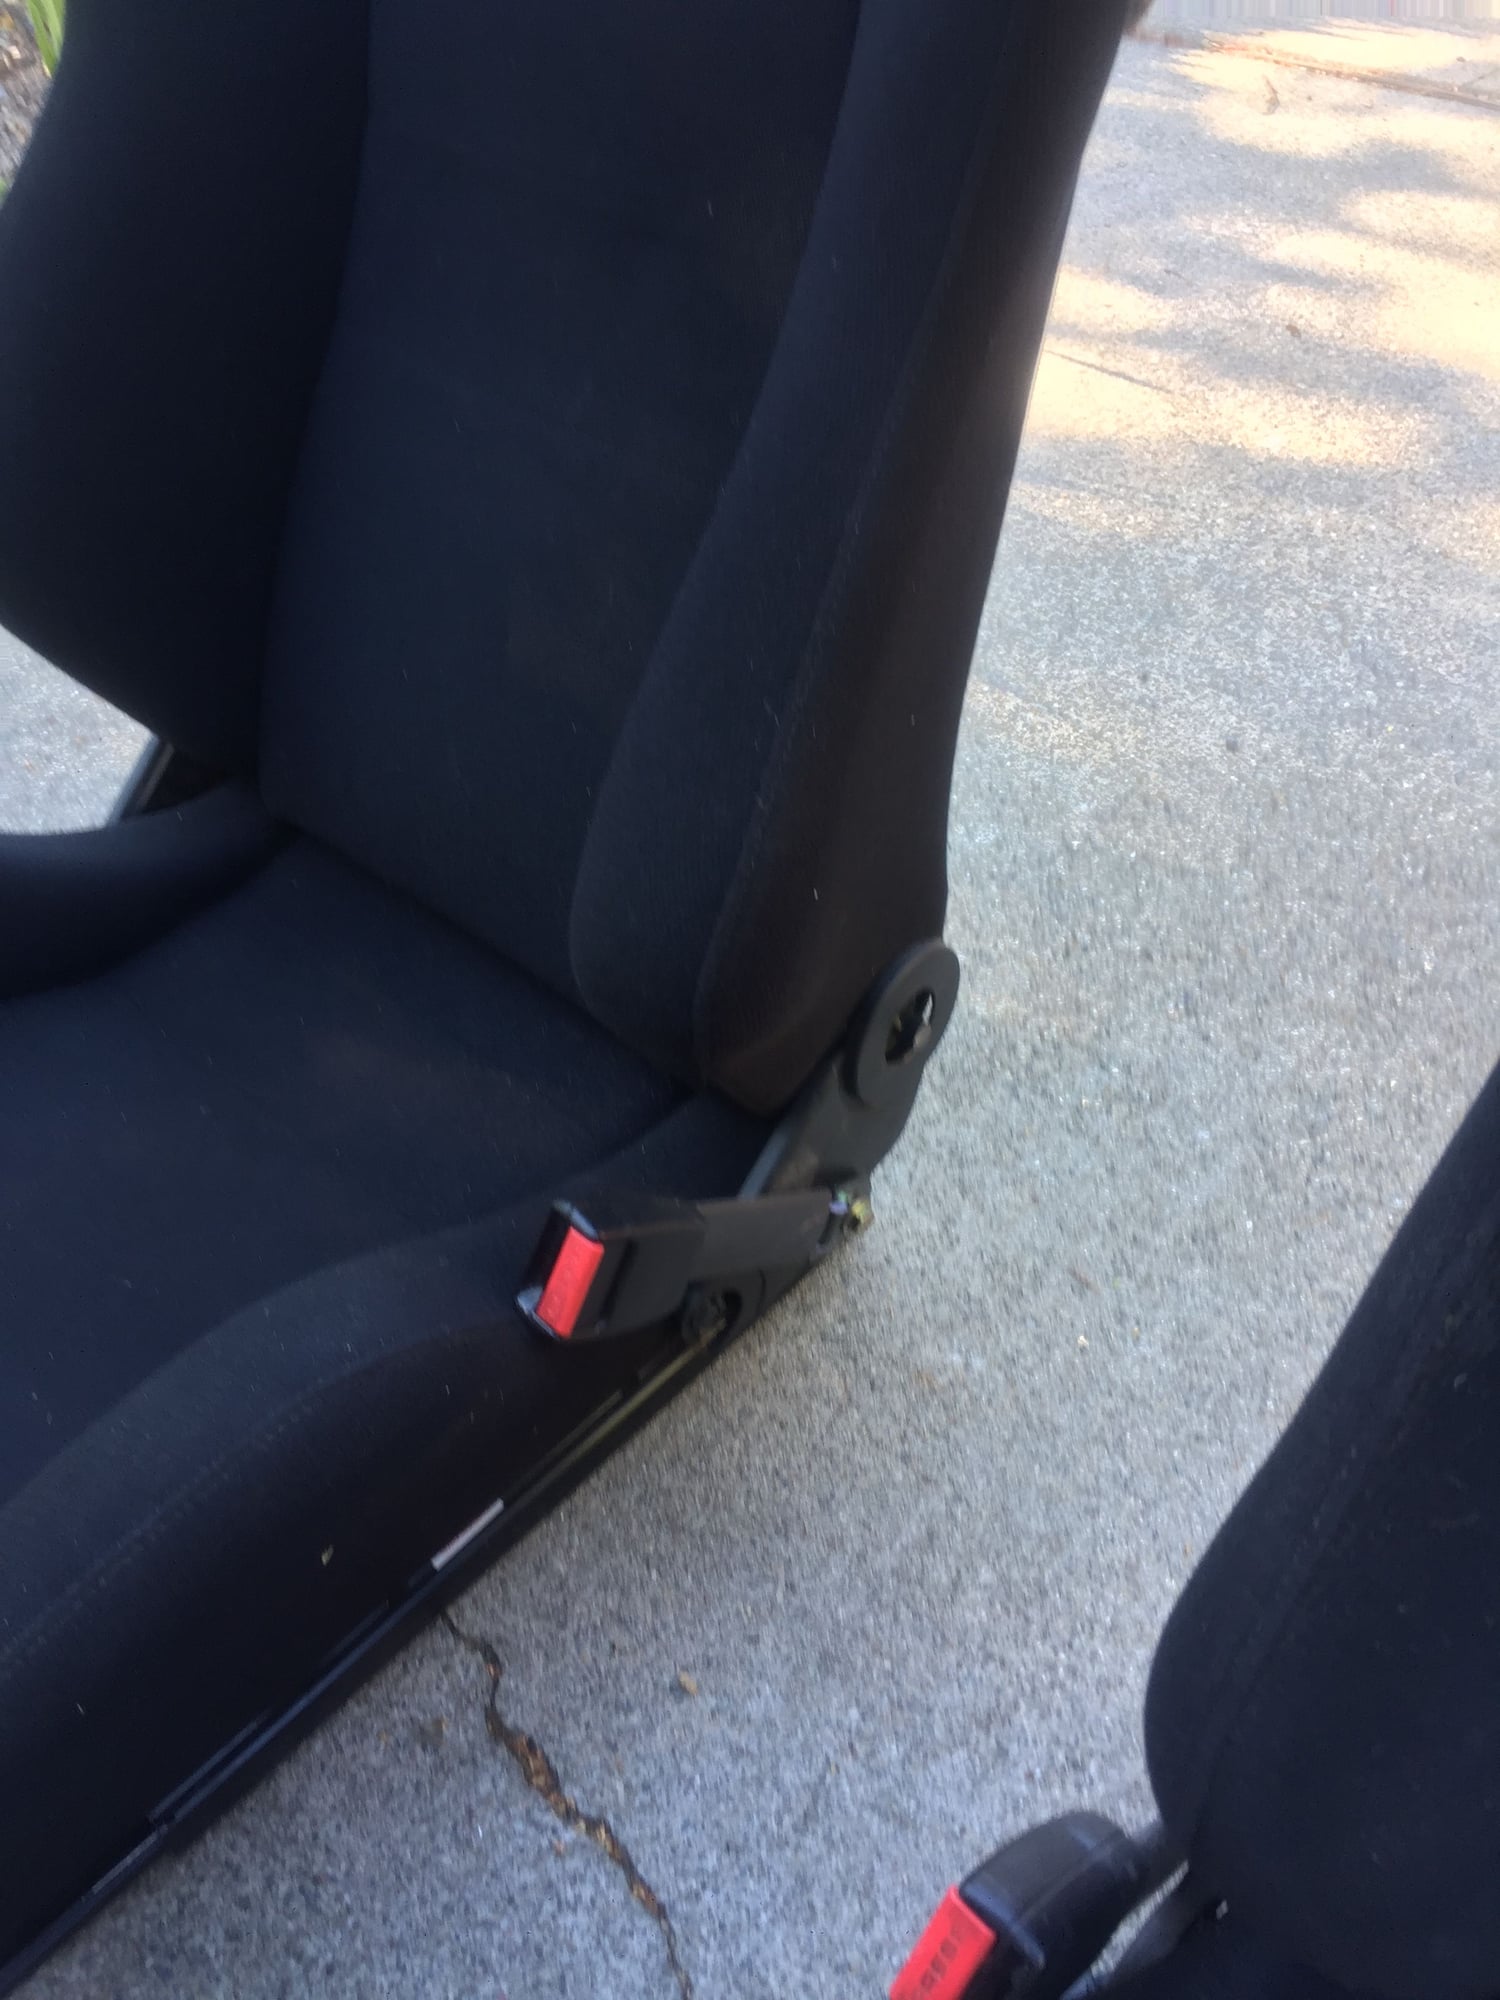 Interior/Upholstery - Recaro Speed seats (2), harnesses, BK belt hardware - Used - 1995 to 1998 Porsche 911 - Oakland, CA 94611, United States